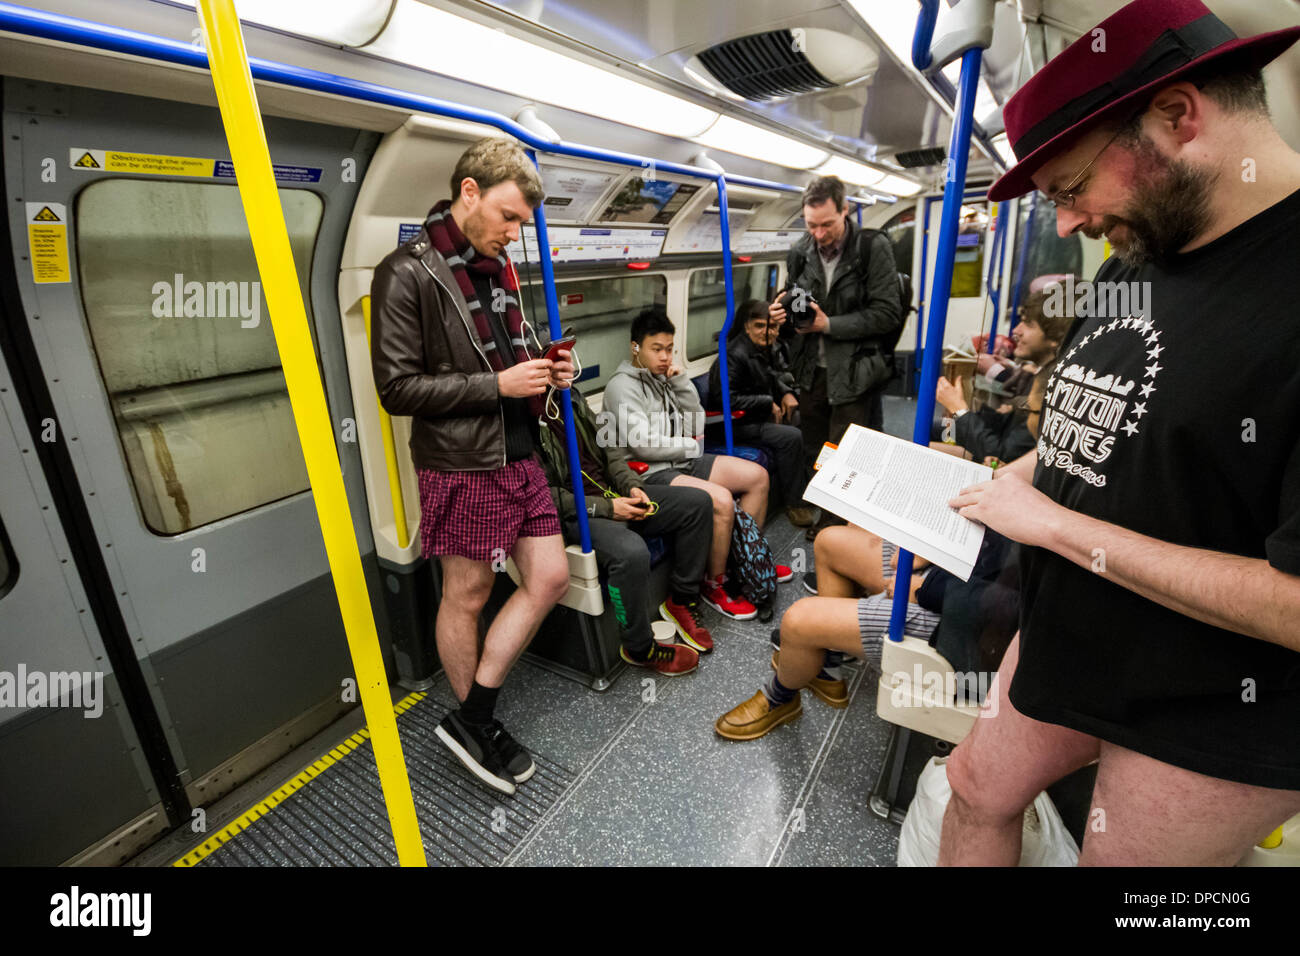 336 London Underground No Pants Subway Ride Stock Photos, High-Res